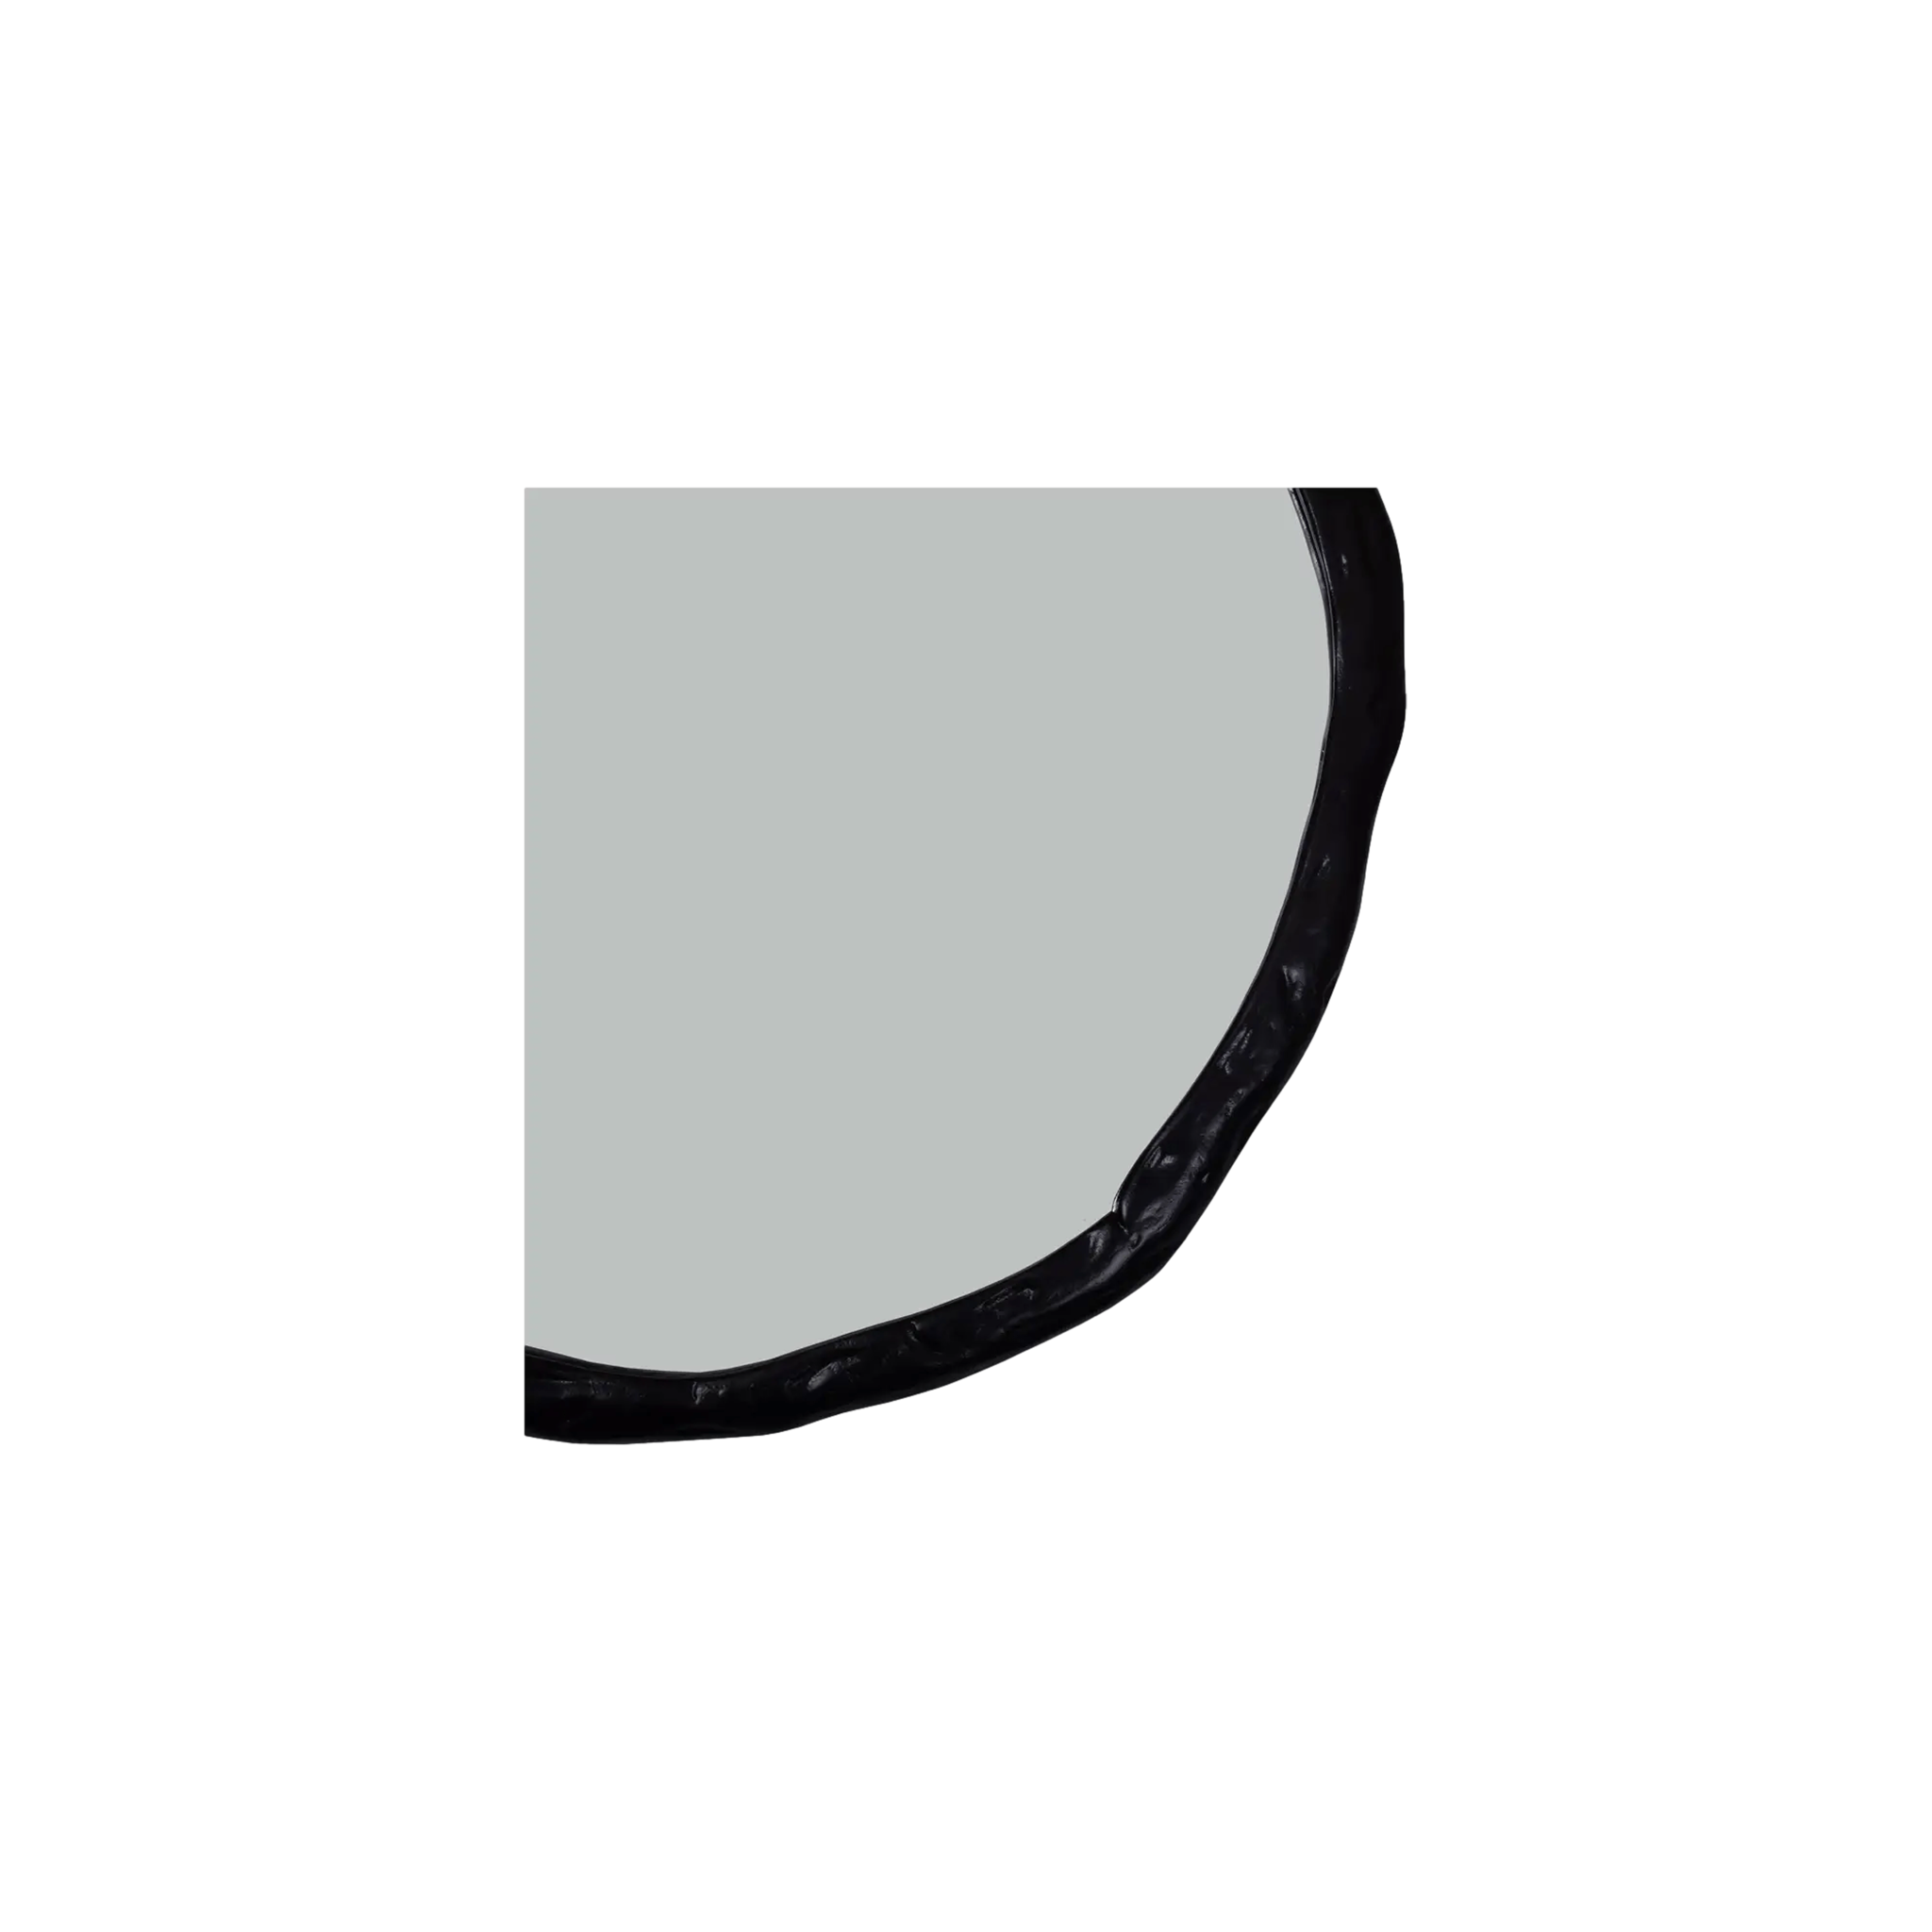 Foundry Mirror (Black - Round)